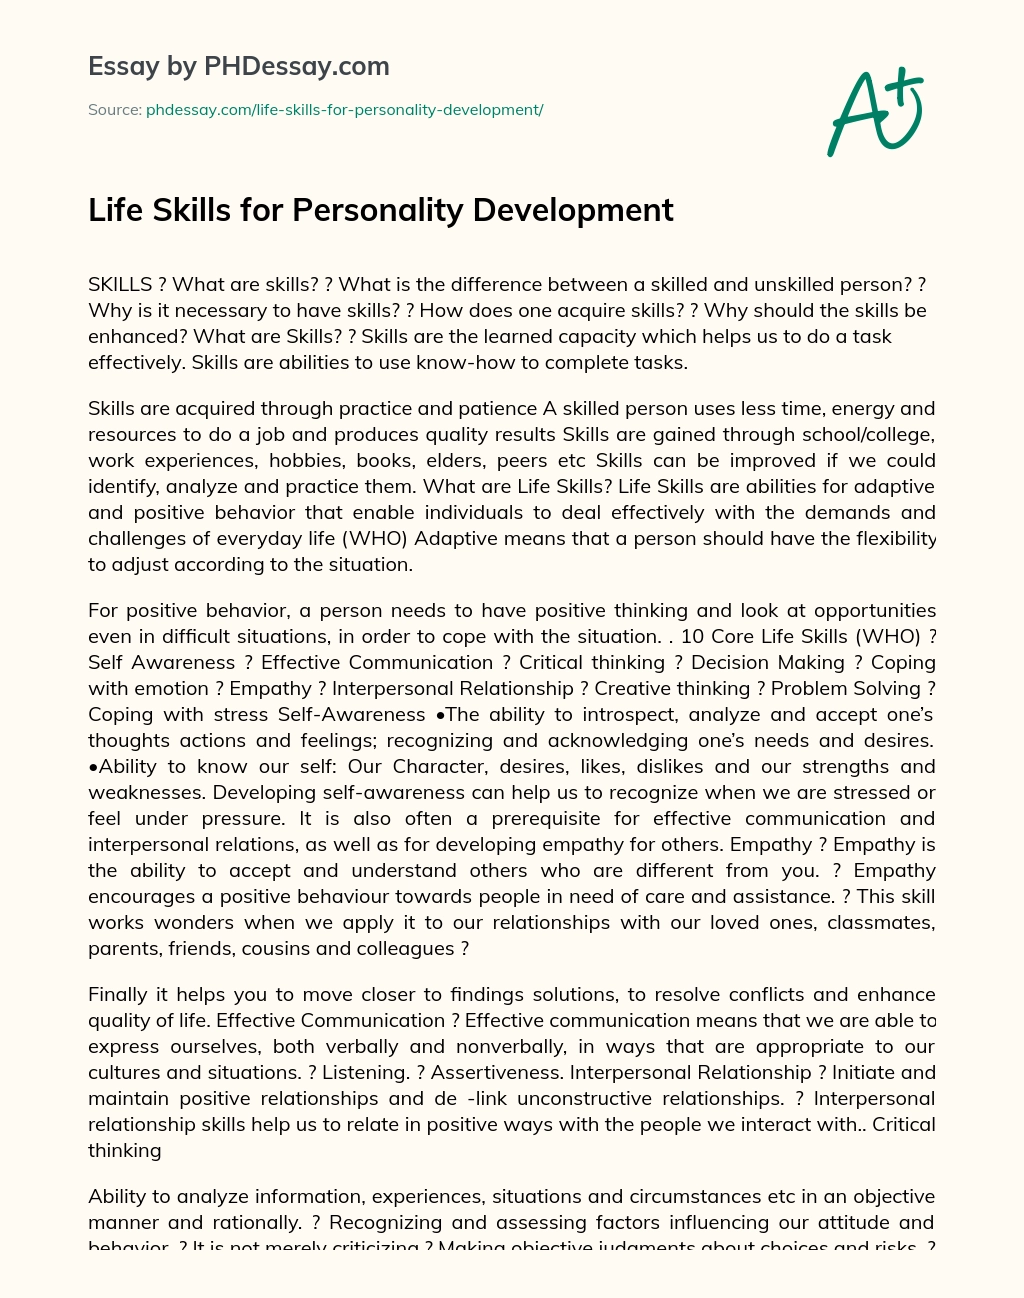 Life Skills for Personality Development essay